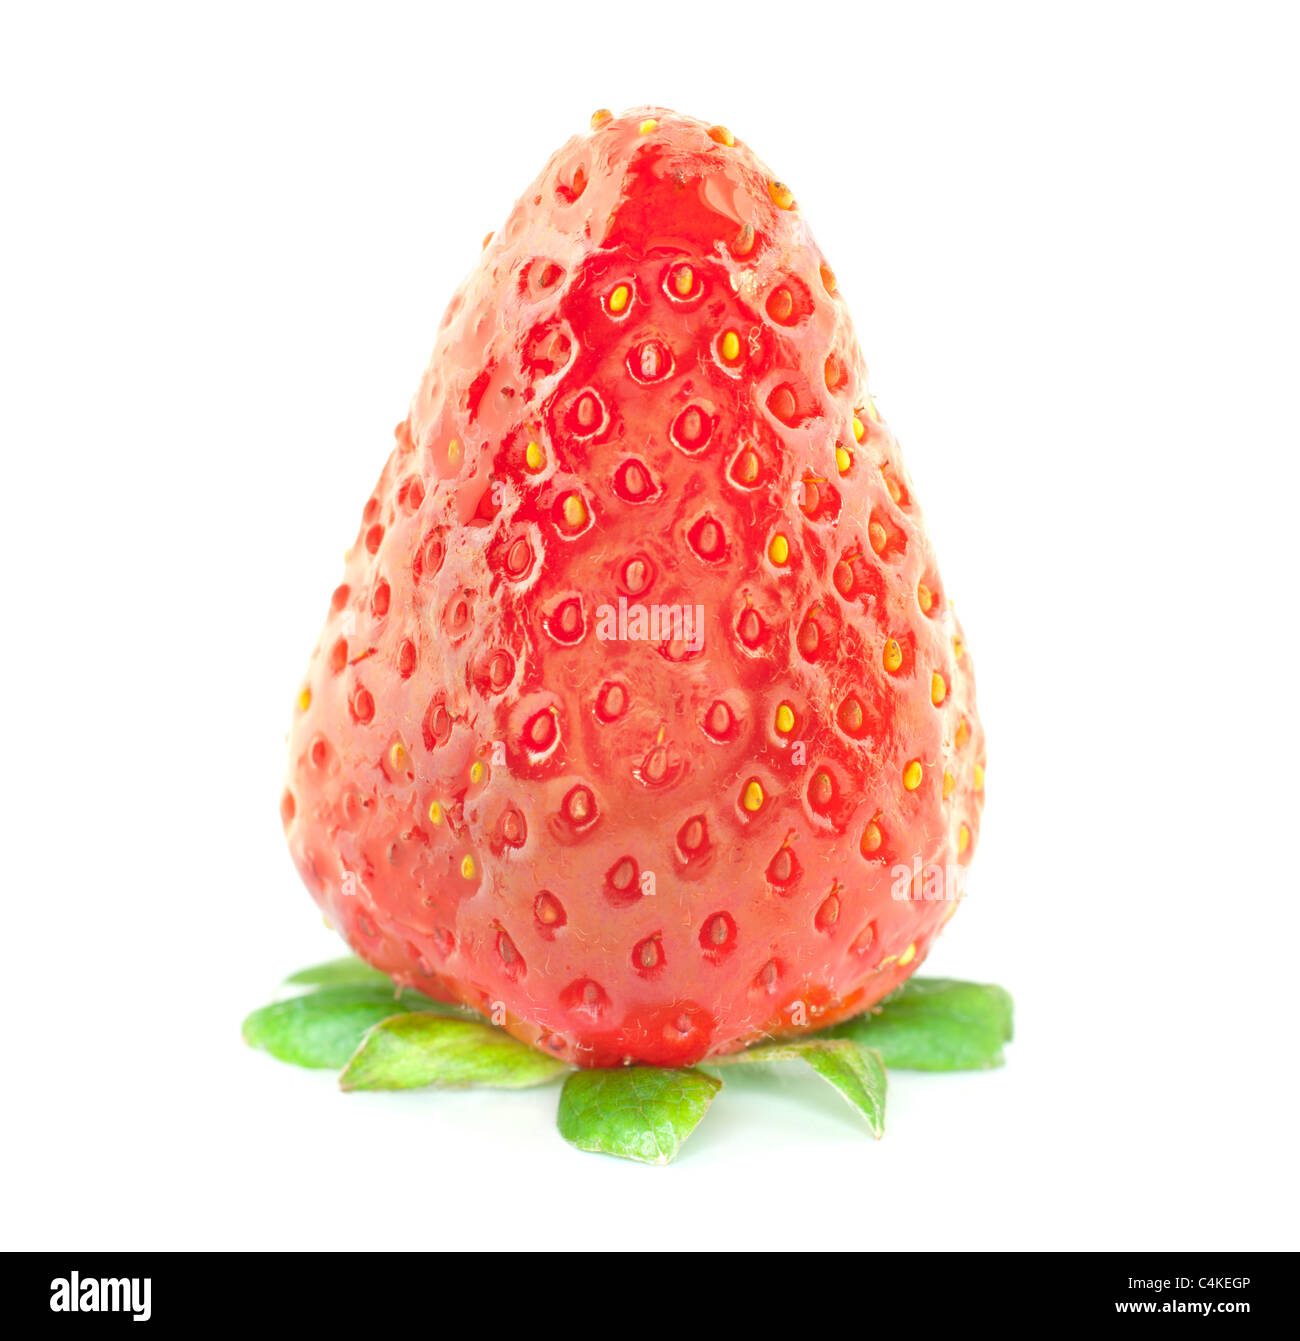 Strawberry on white background Stock Photo